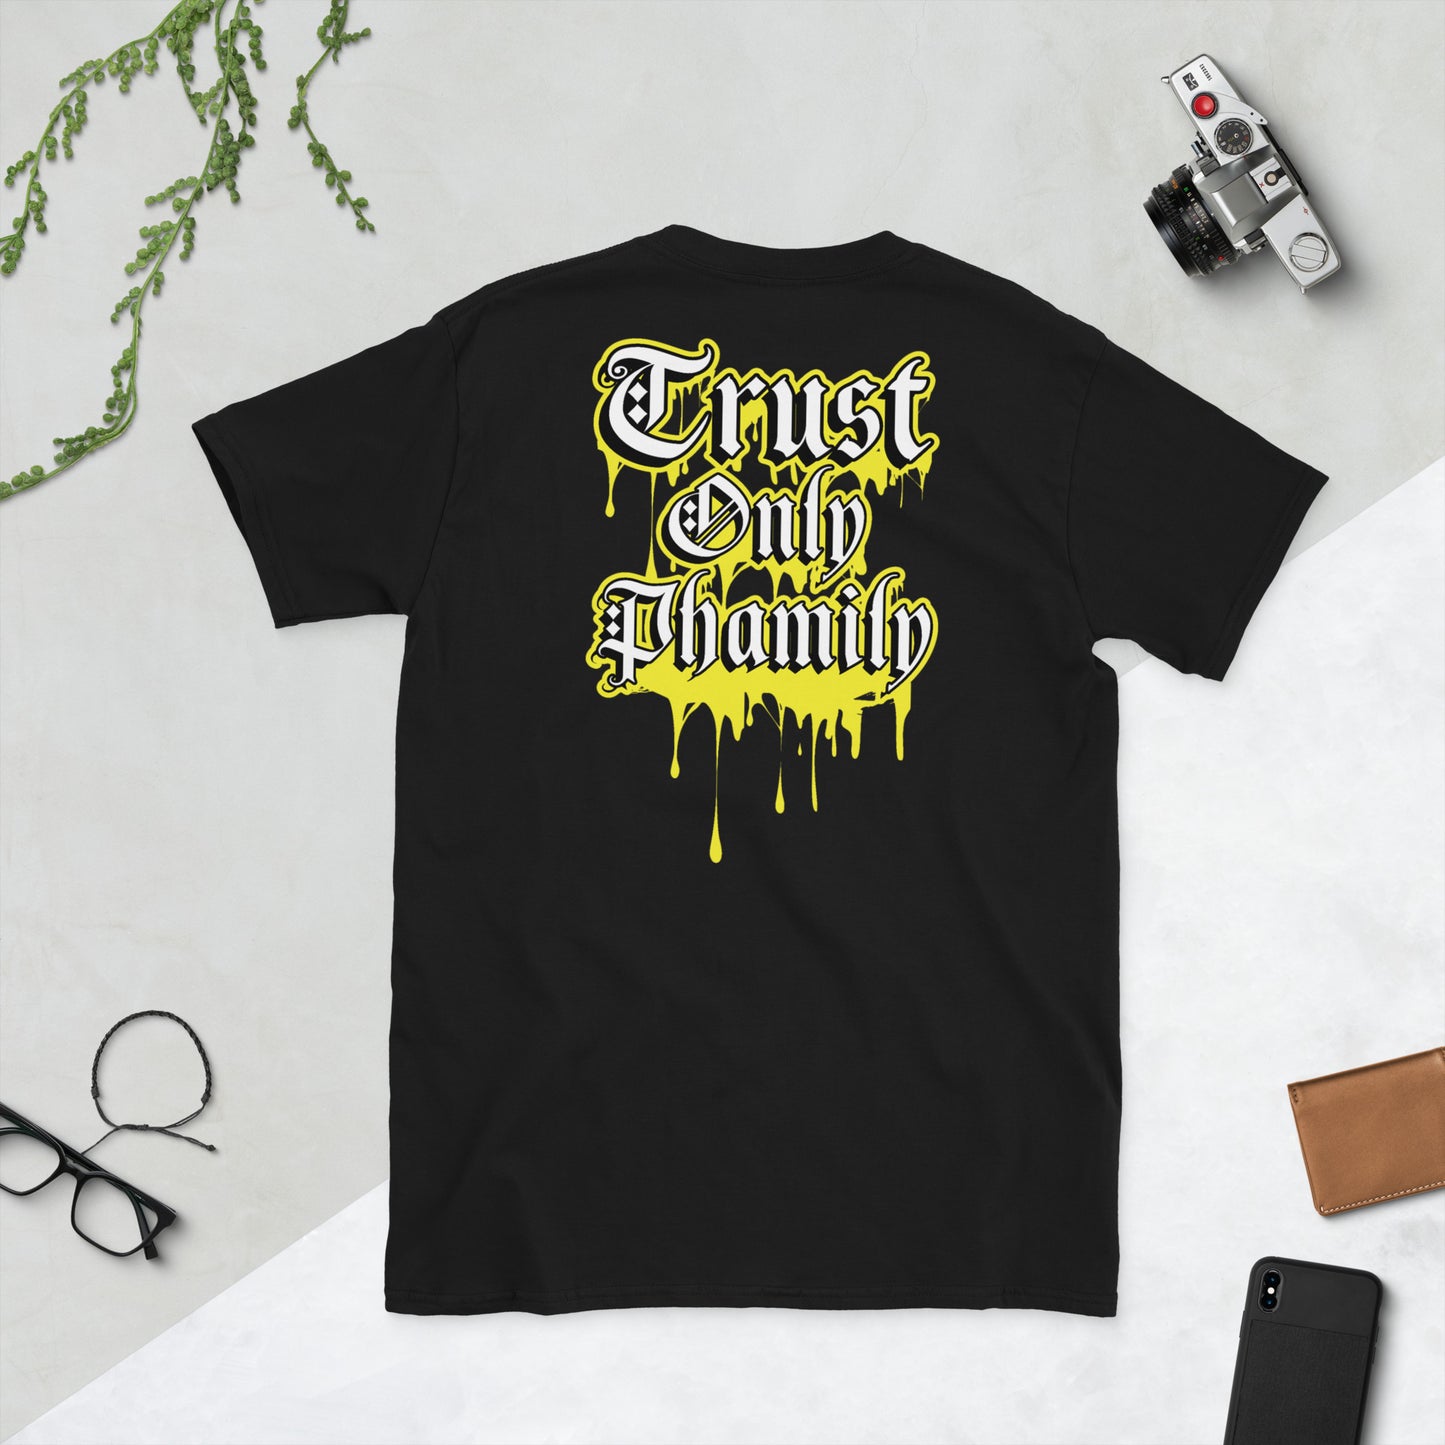 Black trust only phamily t-shirt